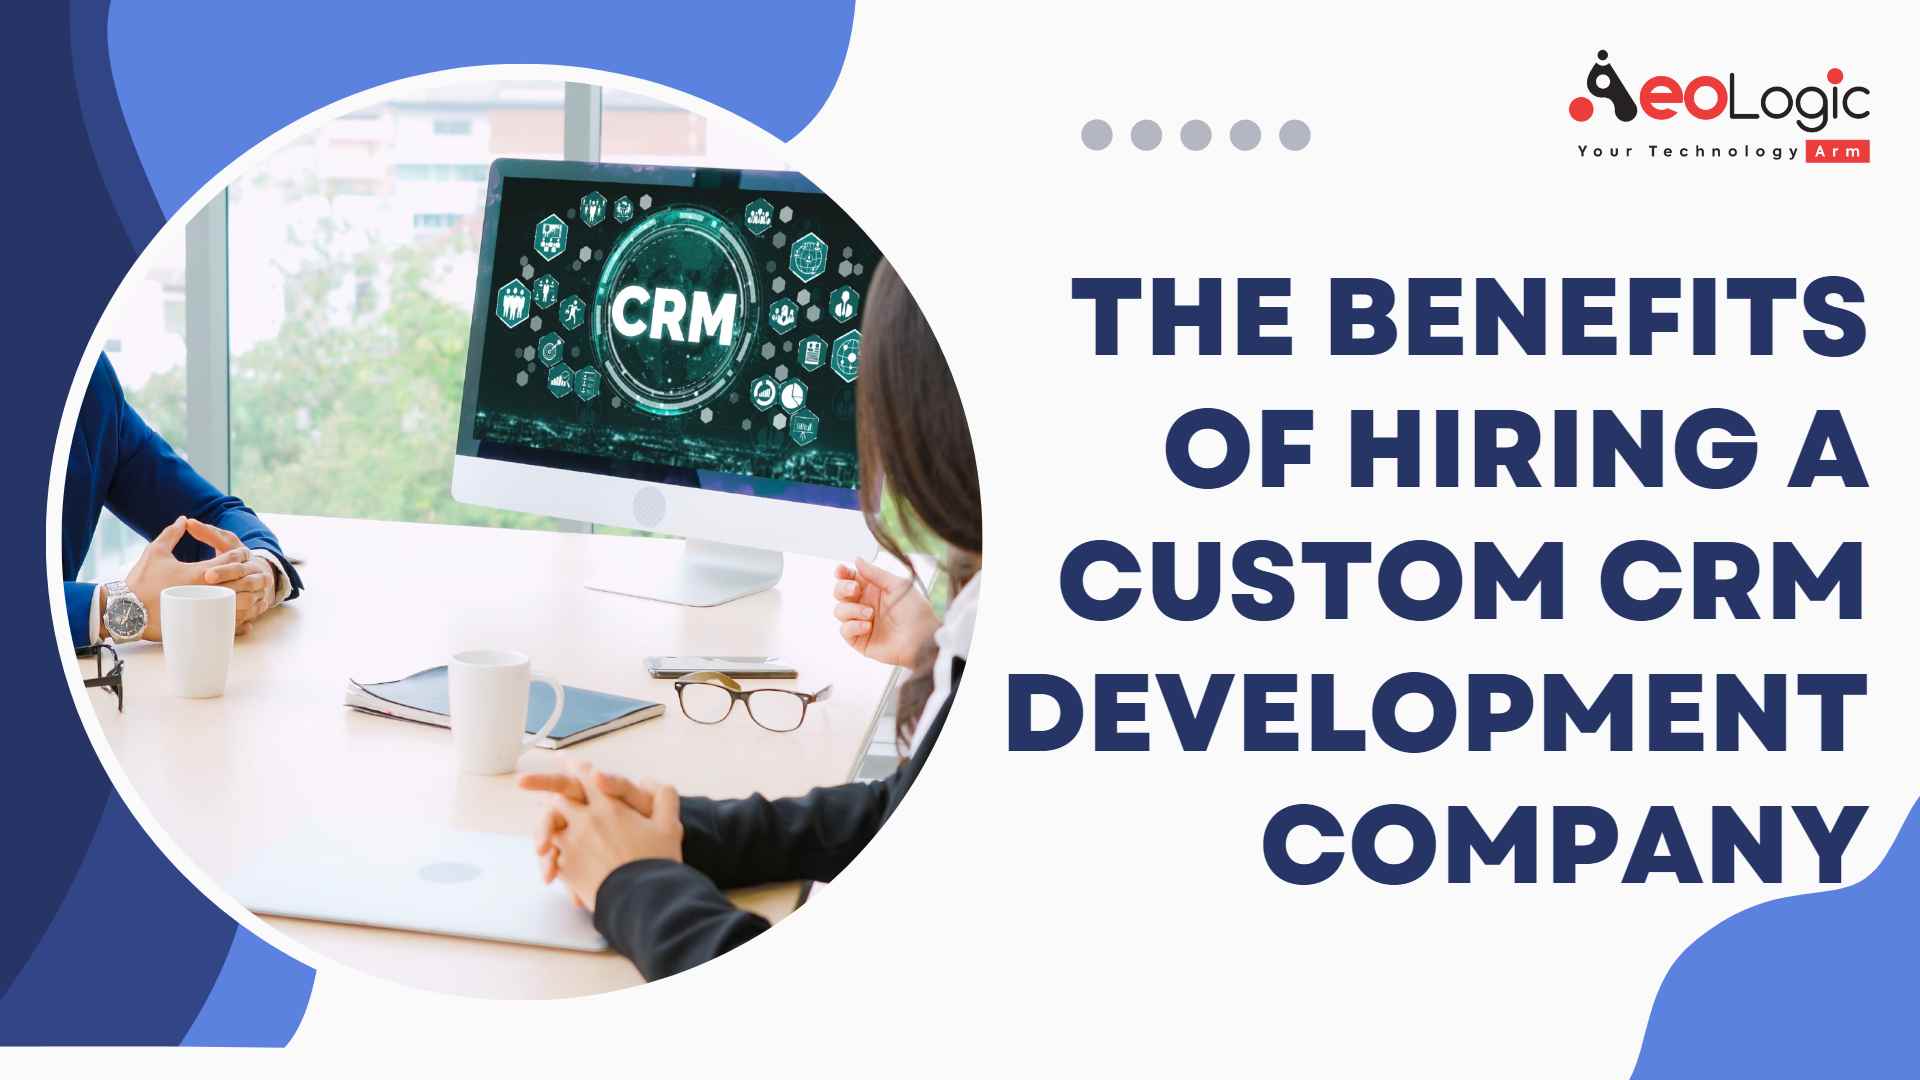 The Benefits of Hiring a Custom CRM Development Company